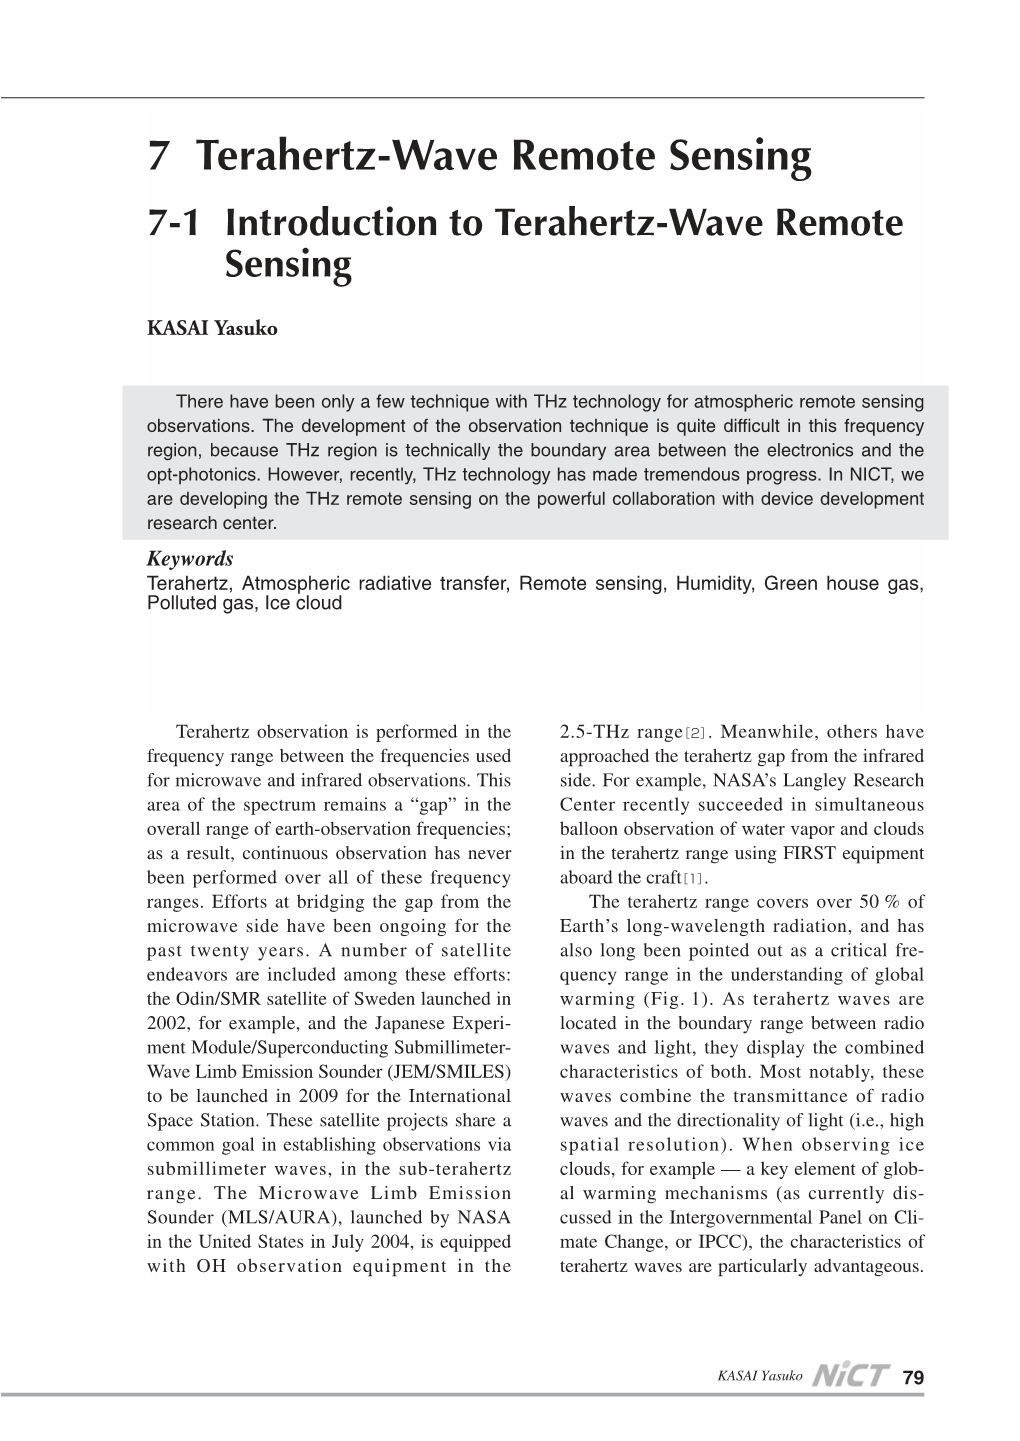 7-1 Introduction to Terahertz-Wave Remote Sensing